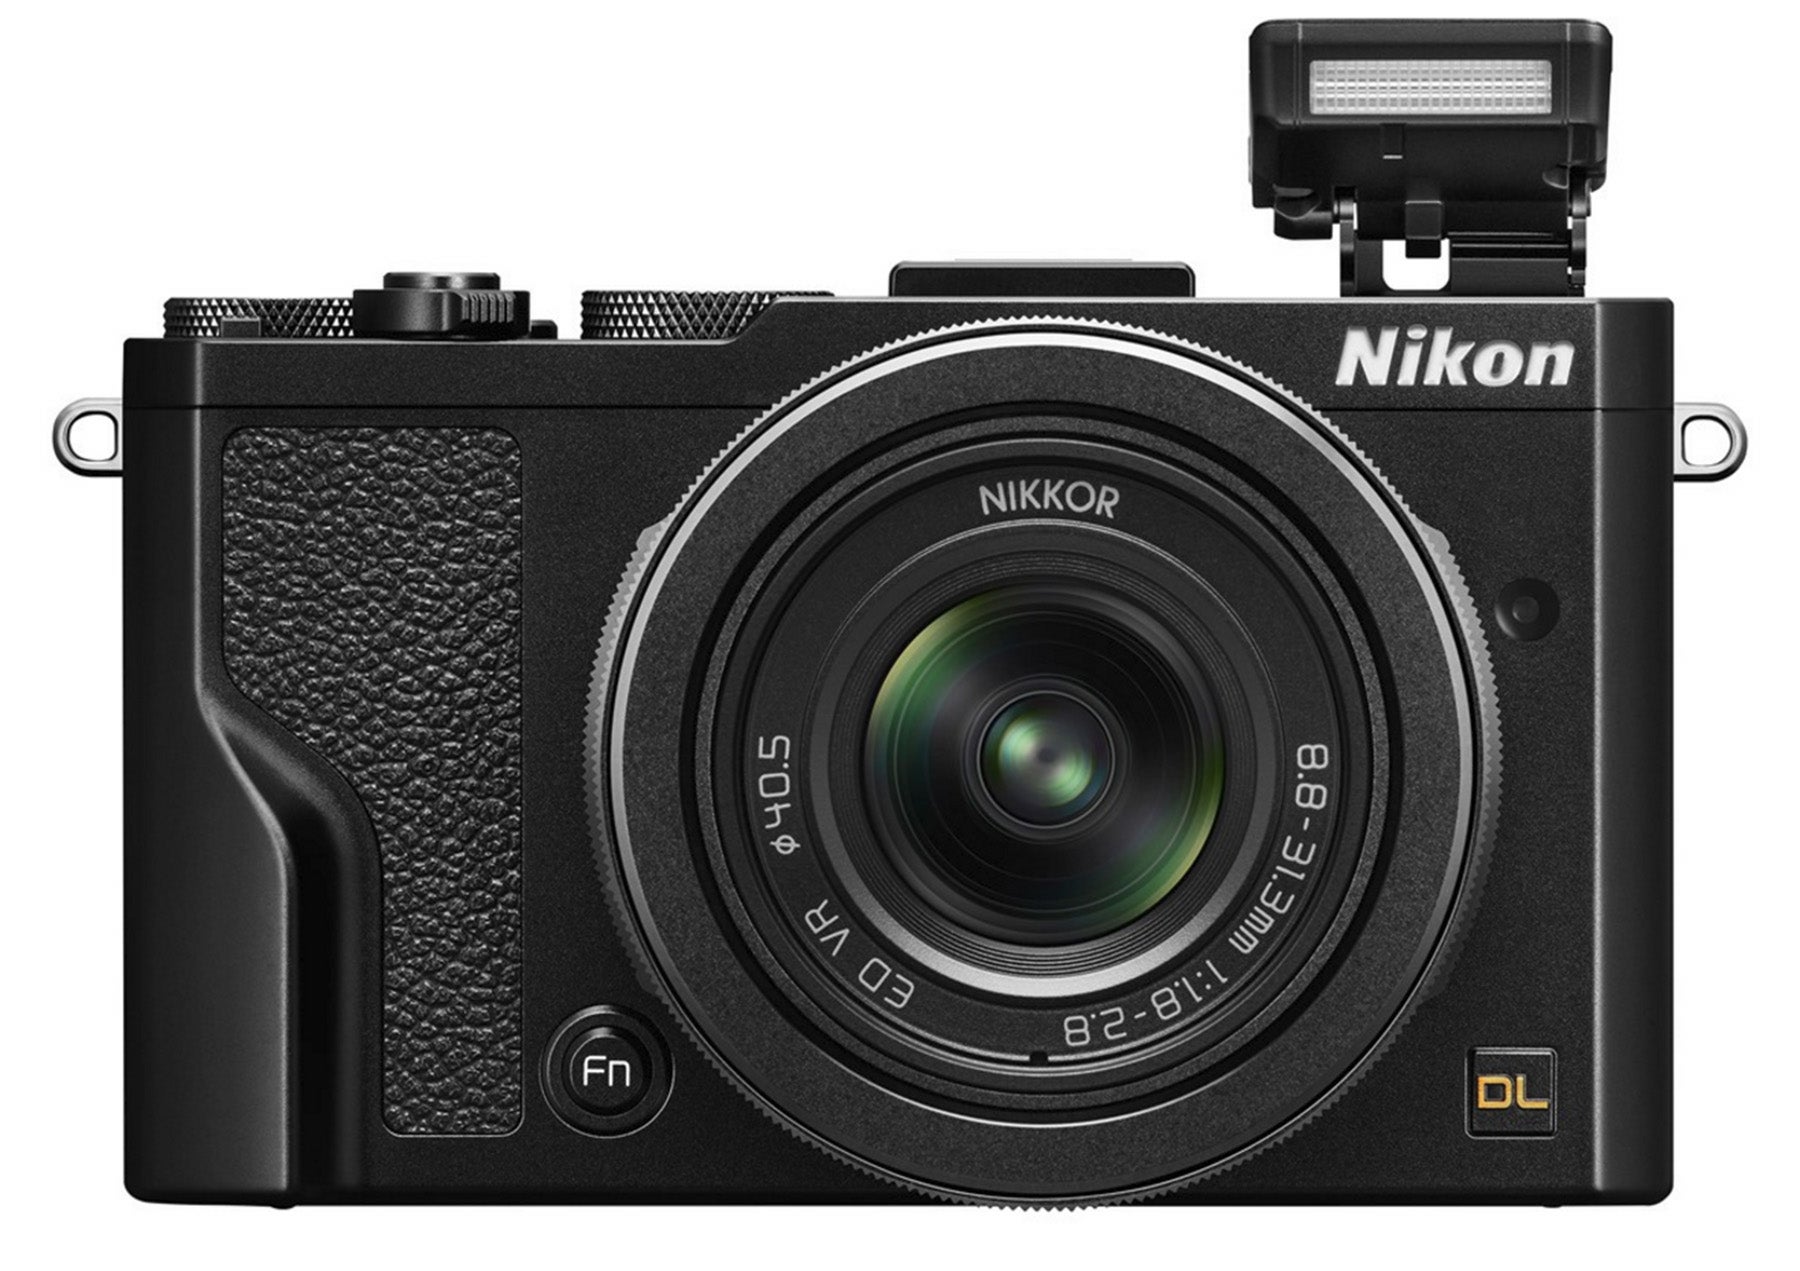 The Nikon DL